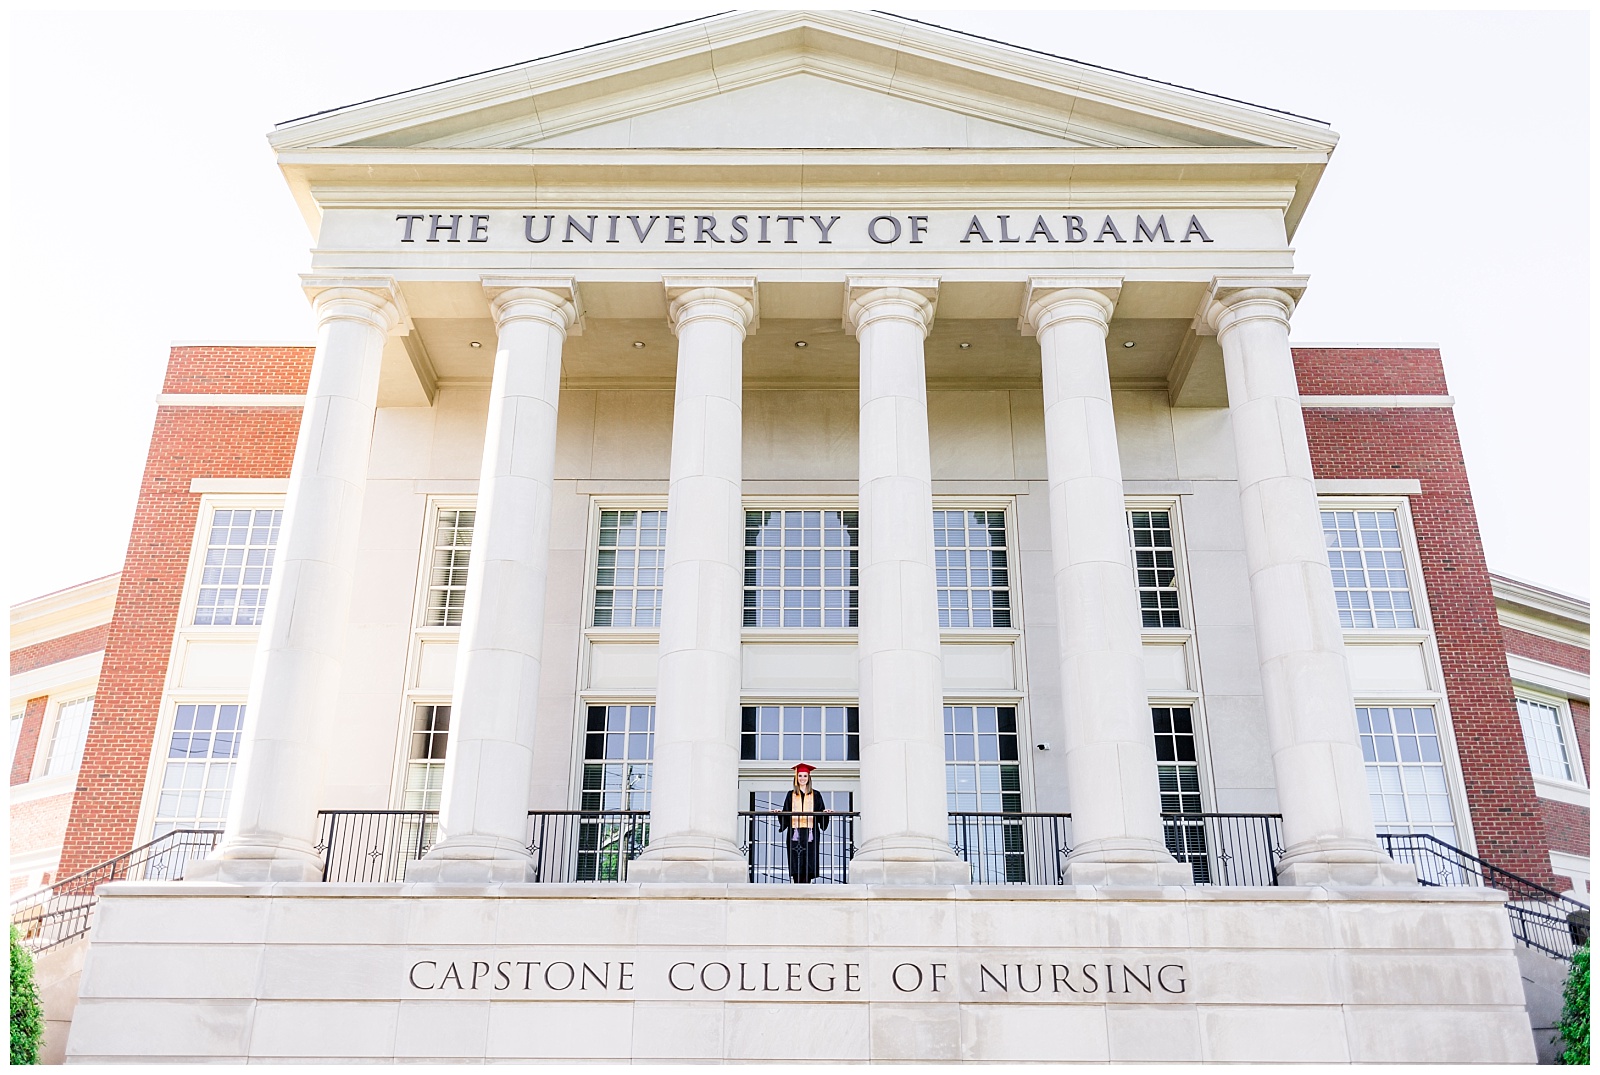 University of Alabama Grad Session at the Capstone College of Nursing in Tuscaloosa